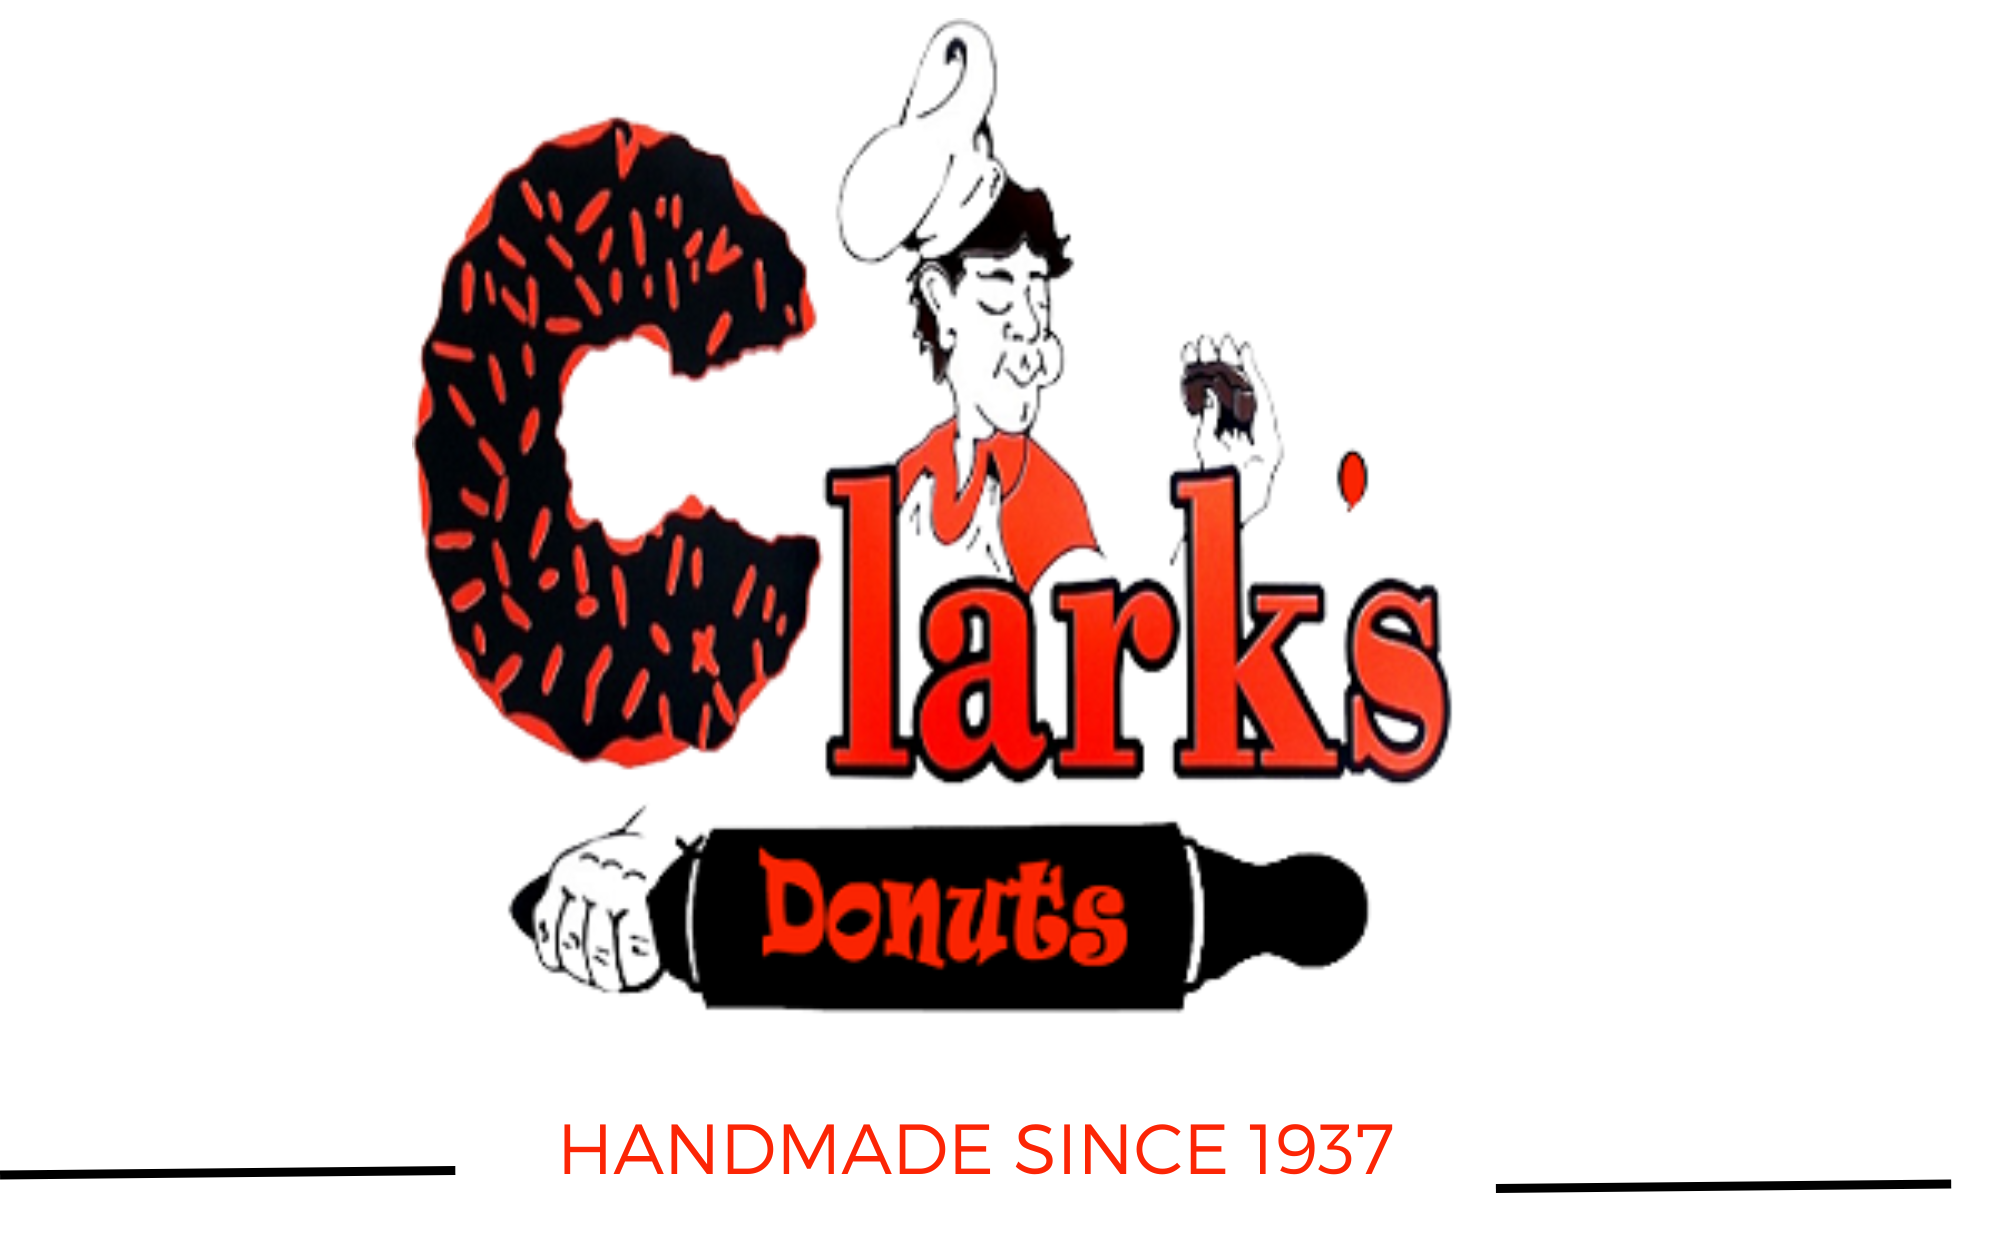 Clarks donut logo